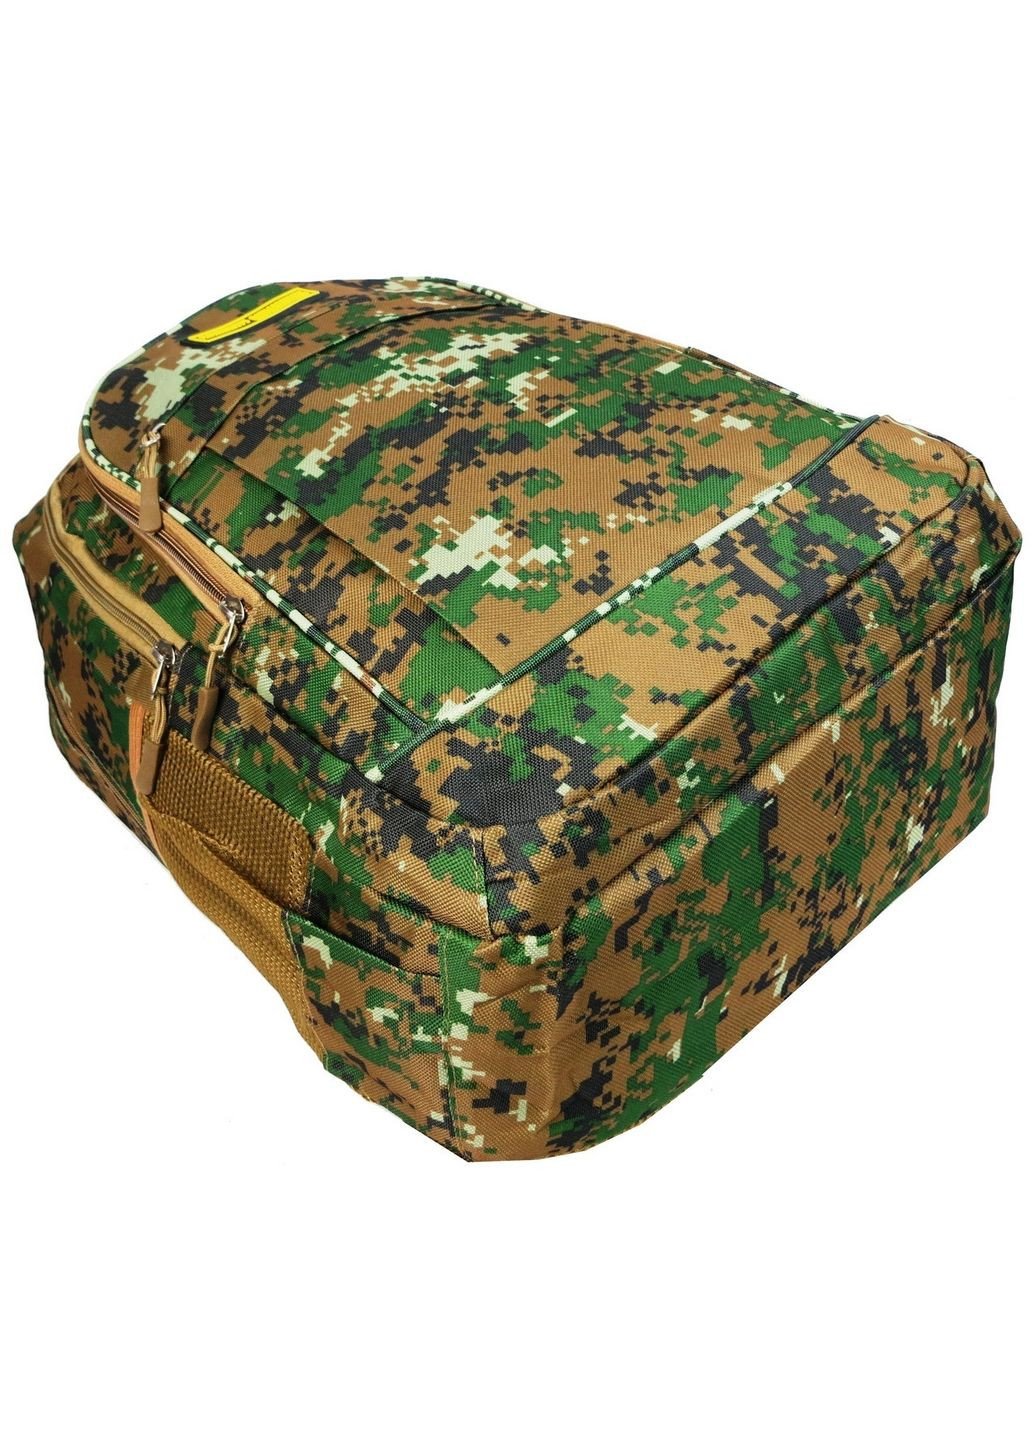 Городской рюкзак в стиле милитари Battlegrounds (282590466)